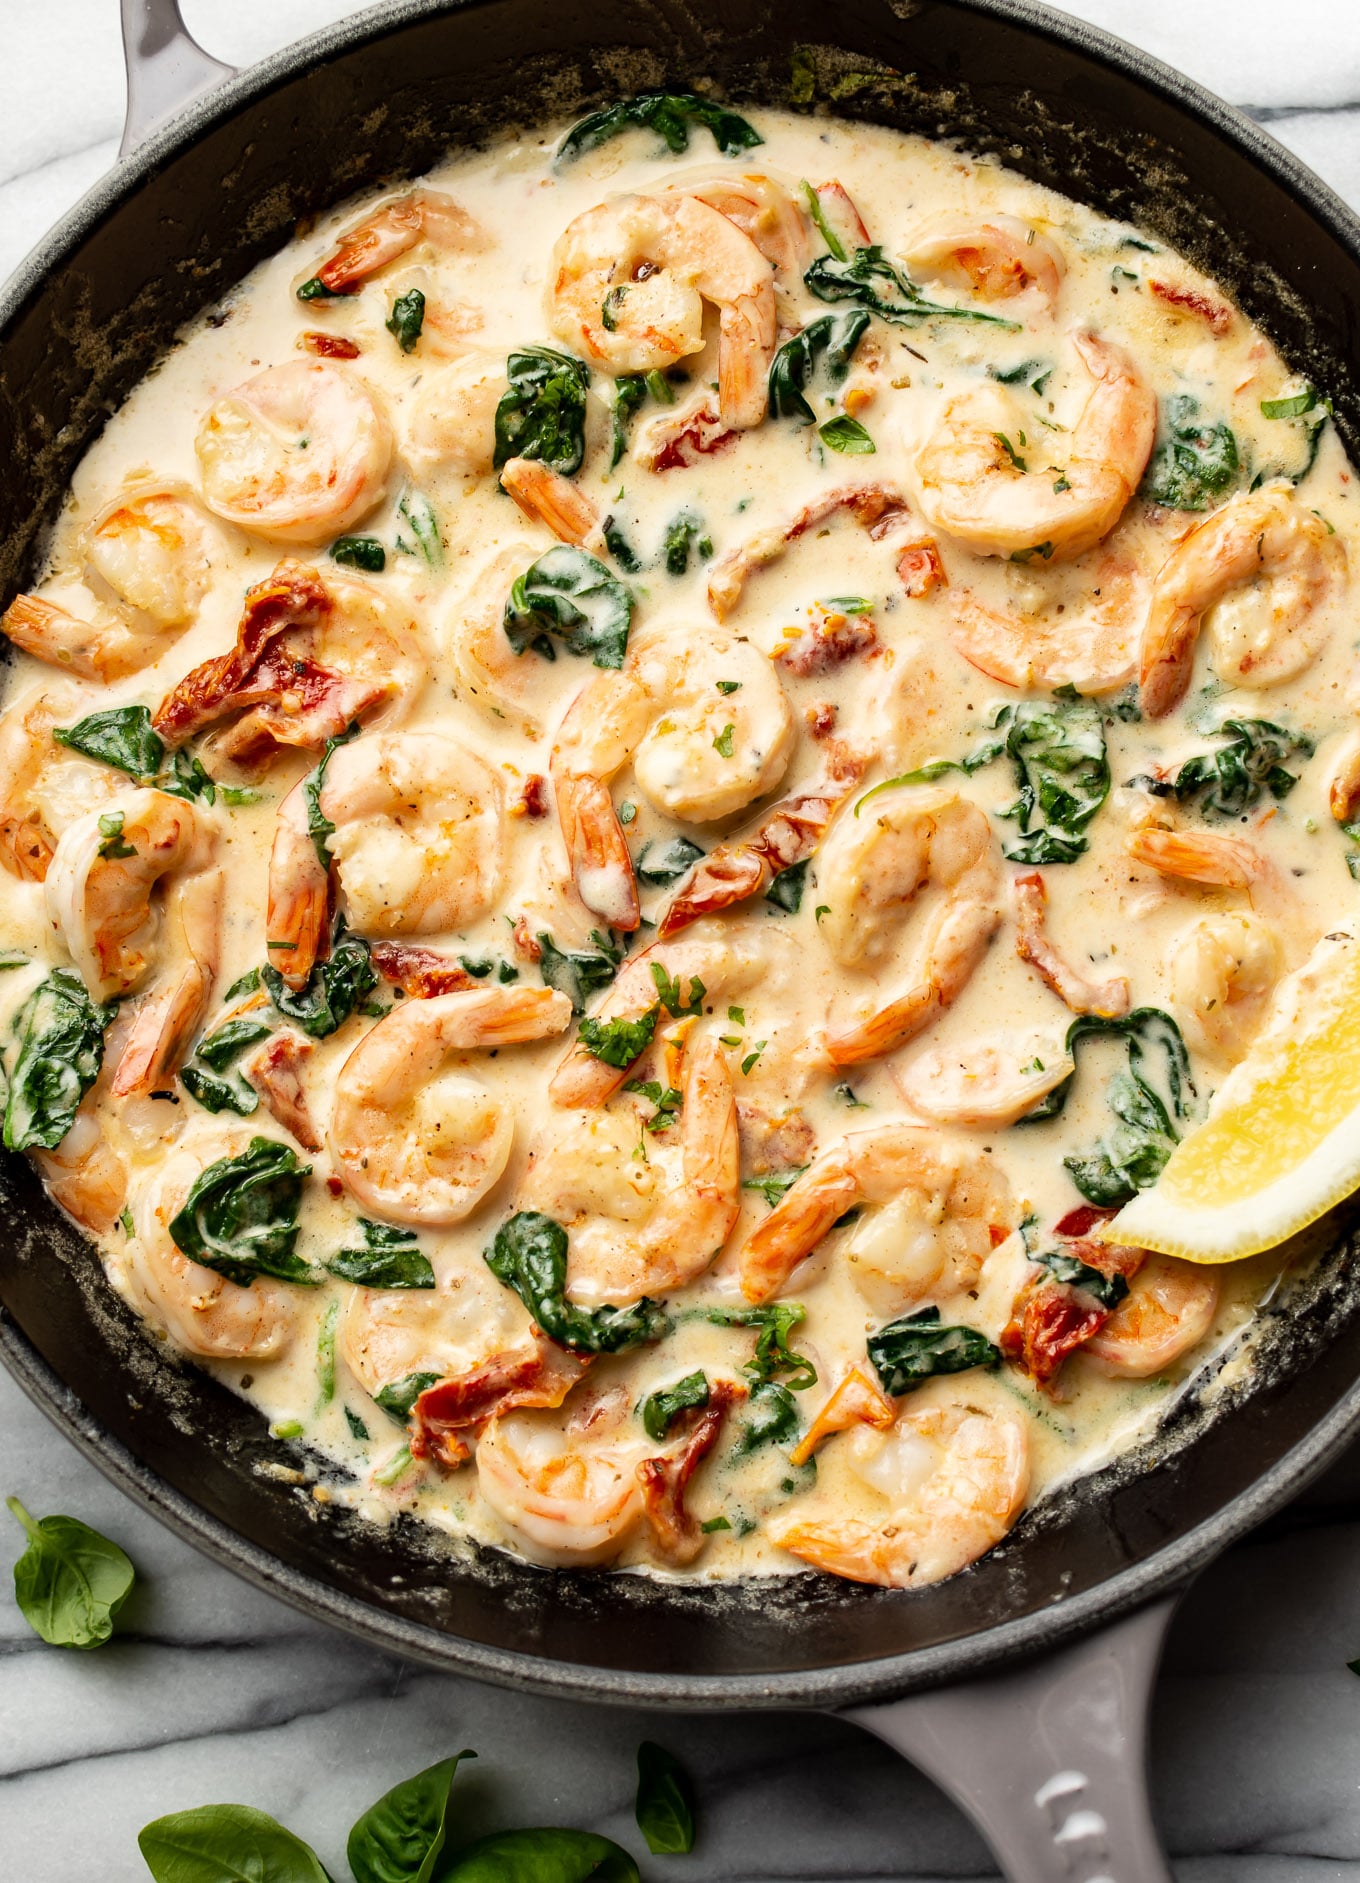 https://www.saltandlavender.com/wp-content/uploads/2017/11/tuscan-shrimp-recipe-1.jpg